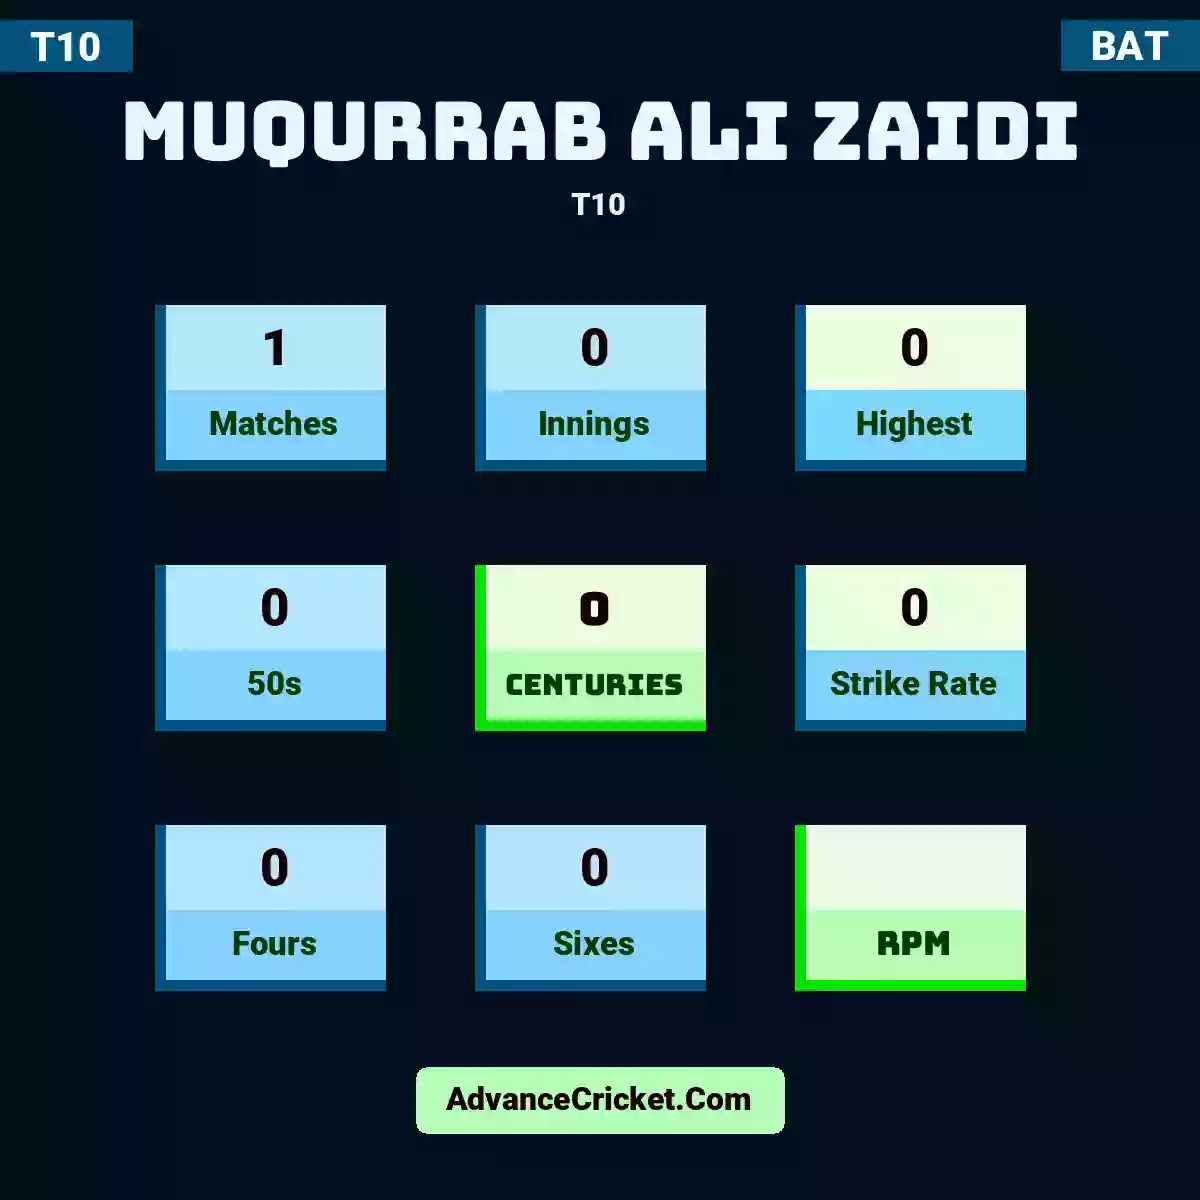 Muqurrab ali zaidi T10 , Muqurrab ali zaidi played 1 matches, scored 0 runs as highest, 0 half-centuries, and 0 centuries, with a strike rate of 0. M.ali zaidi hit 0 fours and 0 sixes.